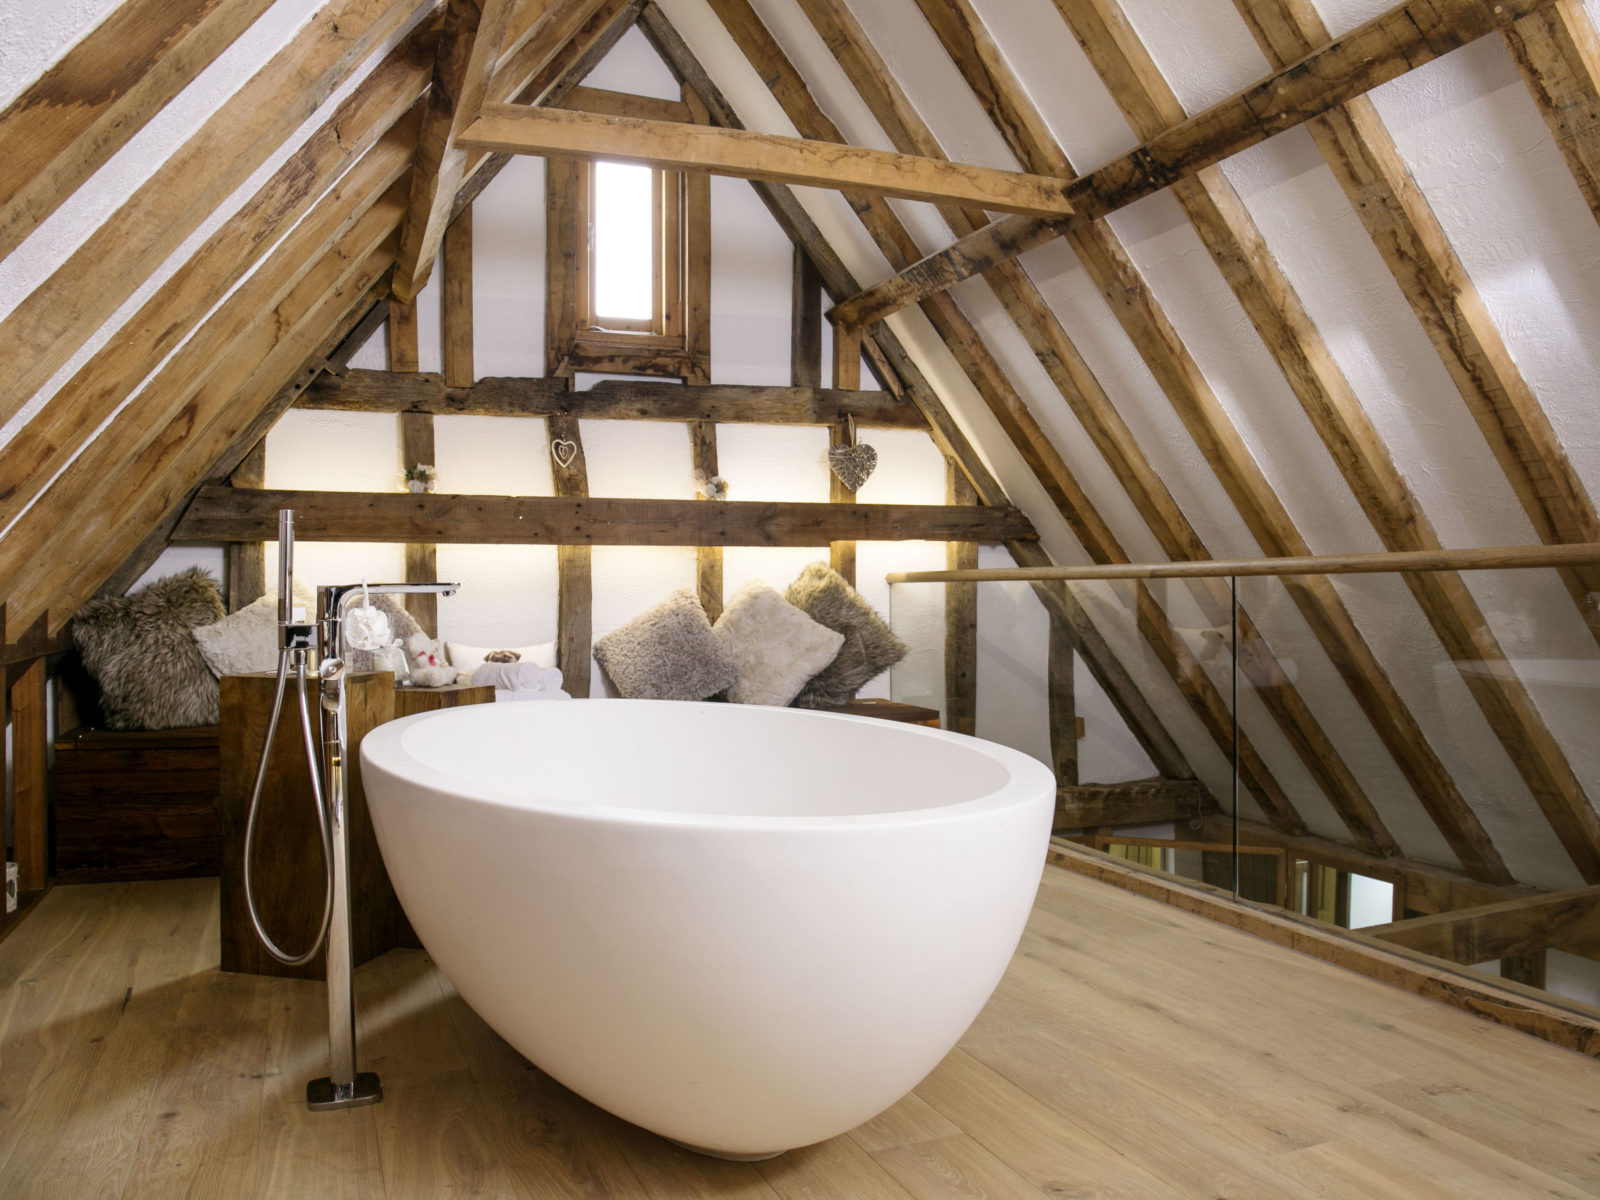 Burry Lodge hotel honeymoon suite with freestanding bath